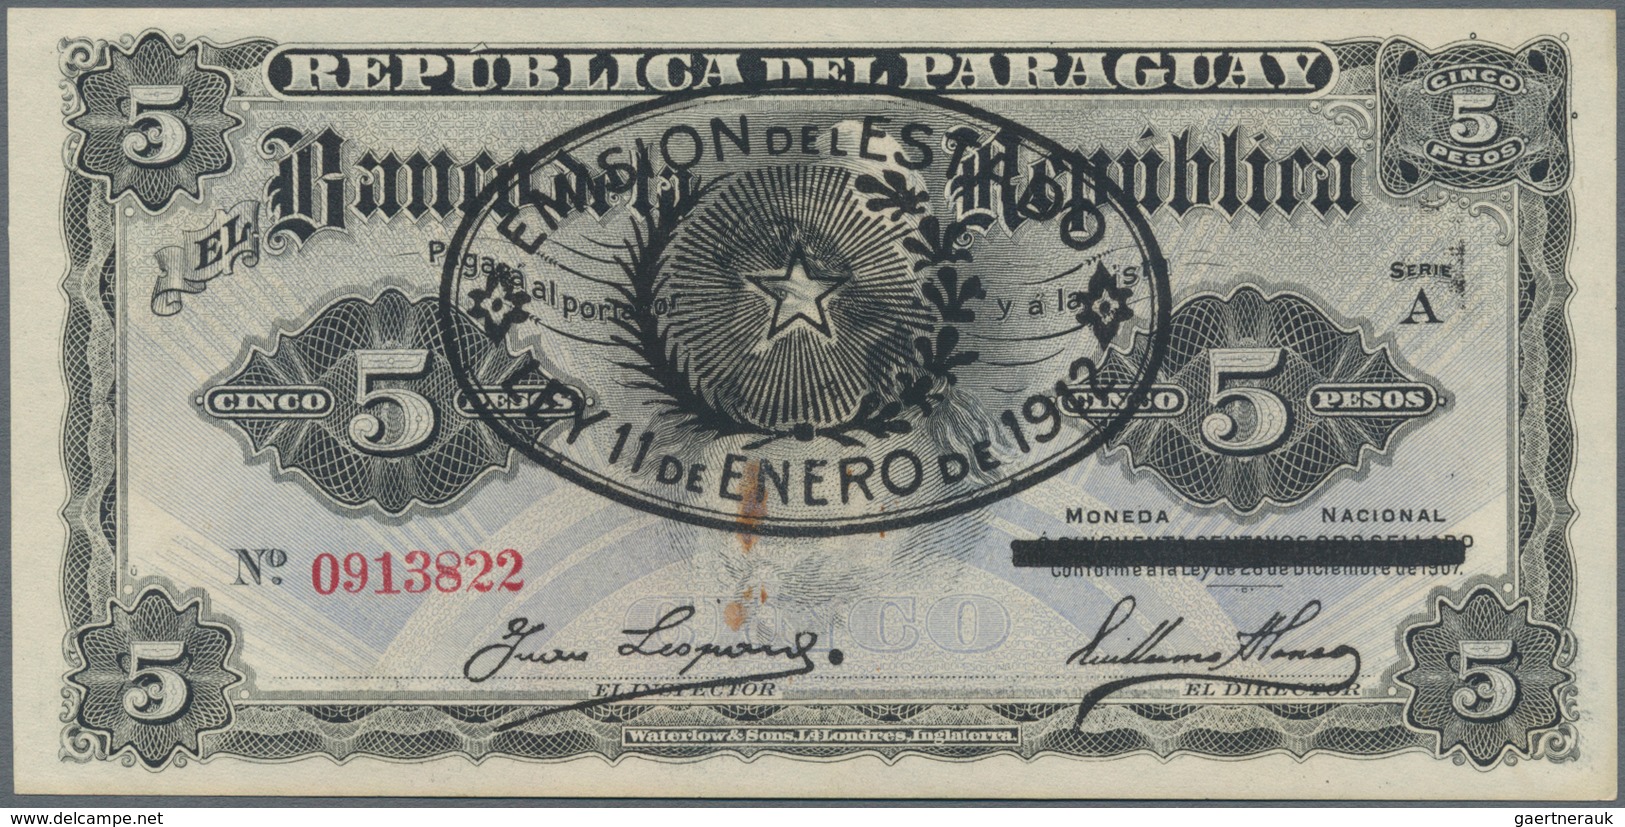 Paraguay: Pair With 5 Pesos Republica Del Paraguay L.1912 P.127 (UNC) And 500 Guaranies Banco Centra - Paraguay